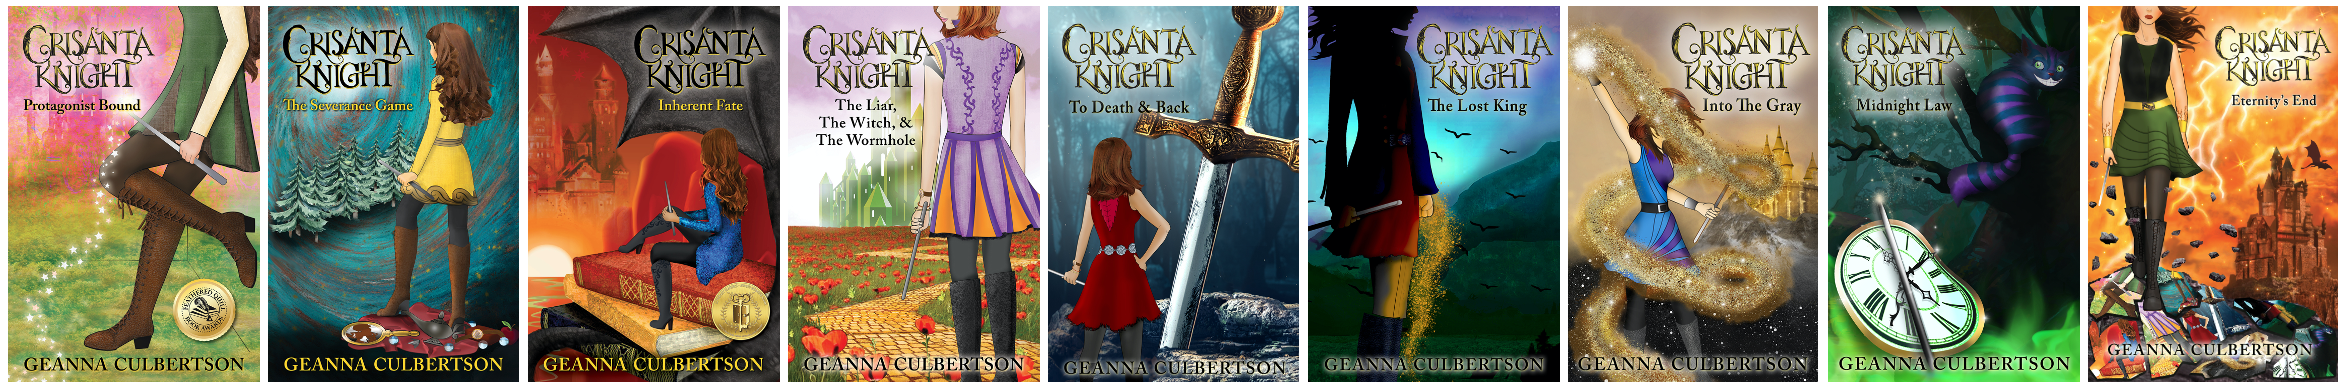 The Crisanta Knight Series